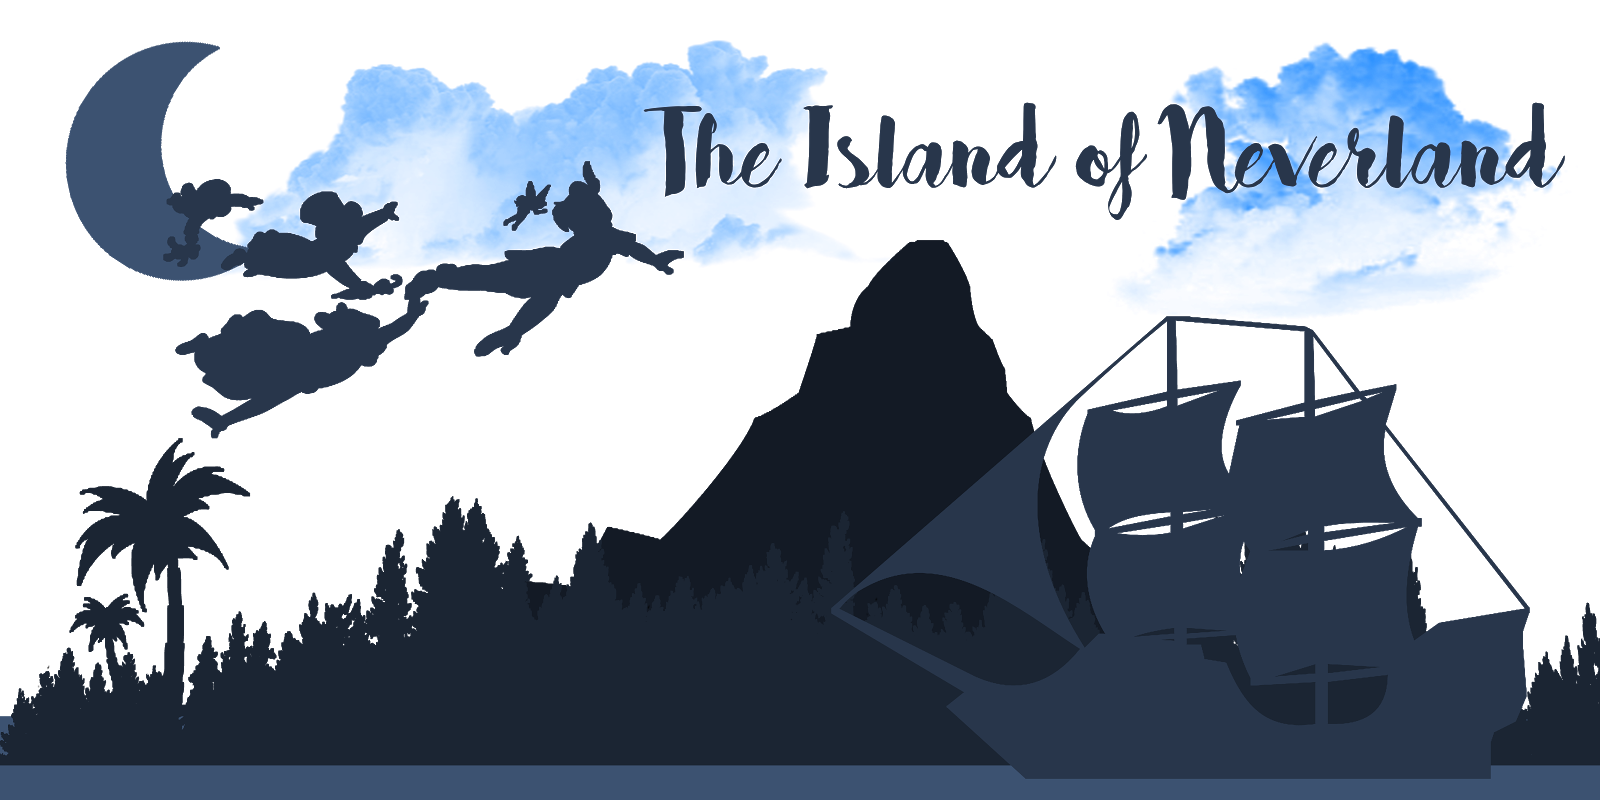 The island of neverland